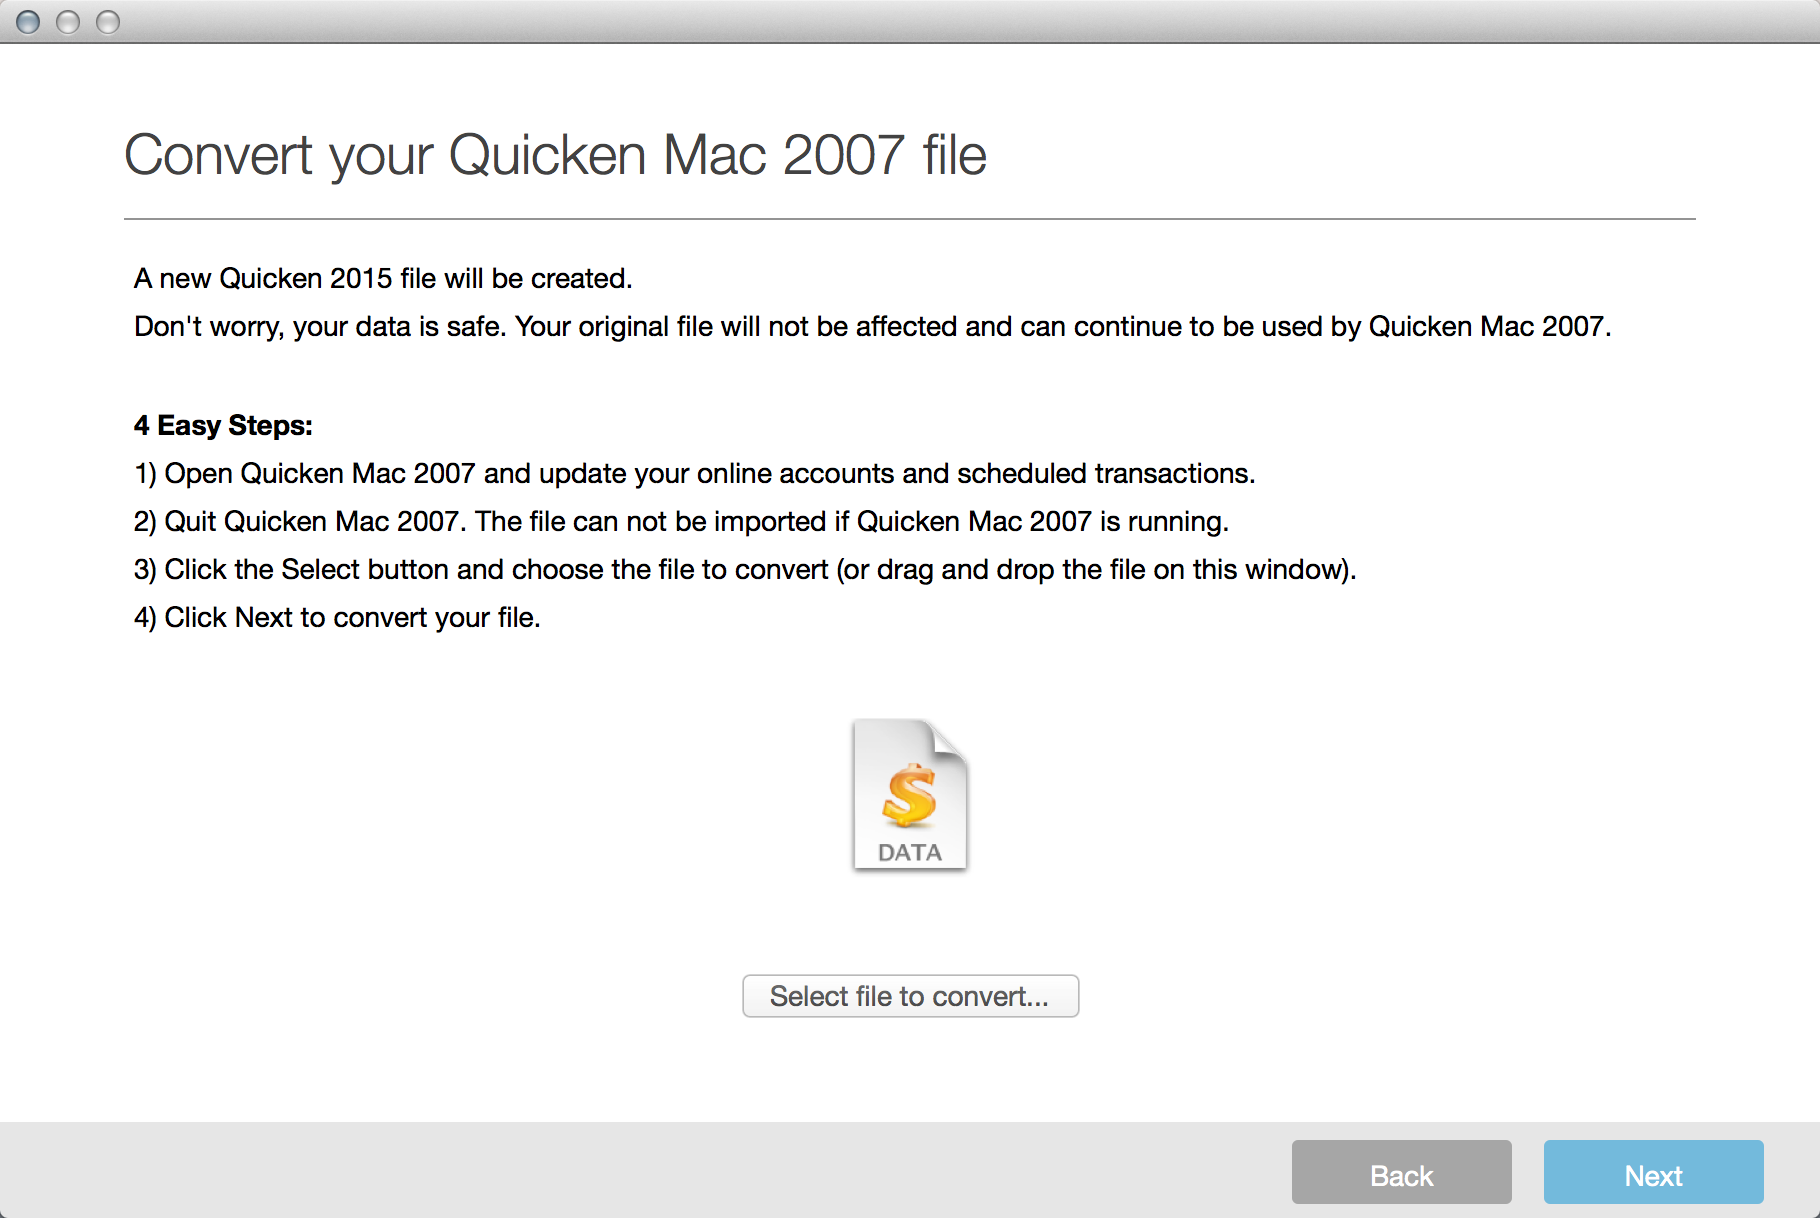 quicken for mac 2018 features